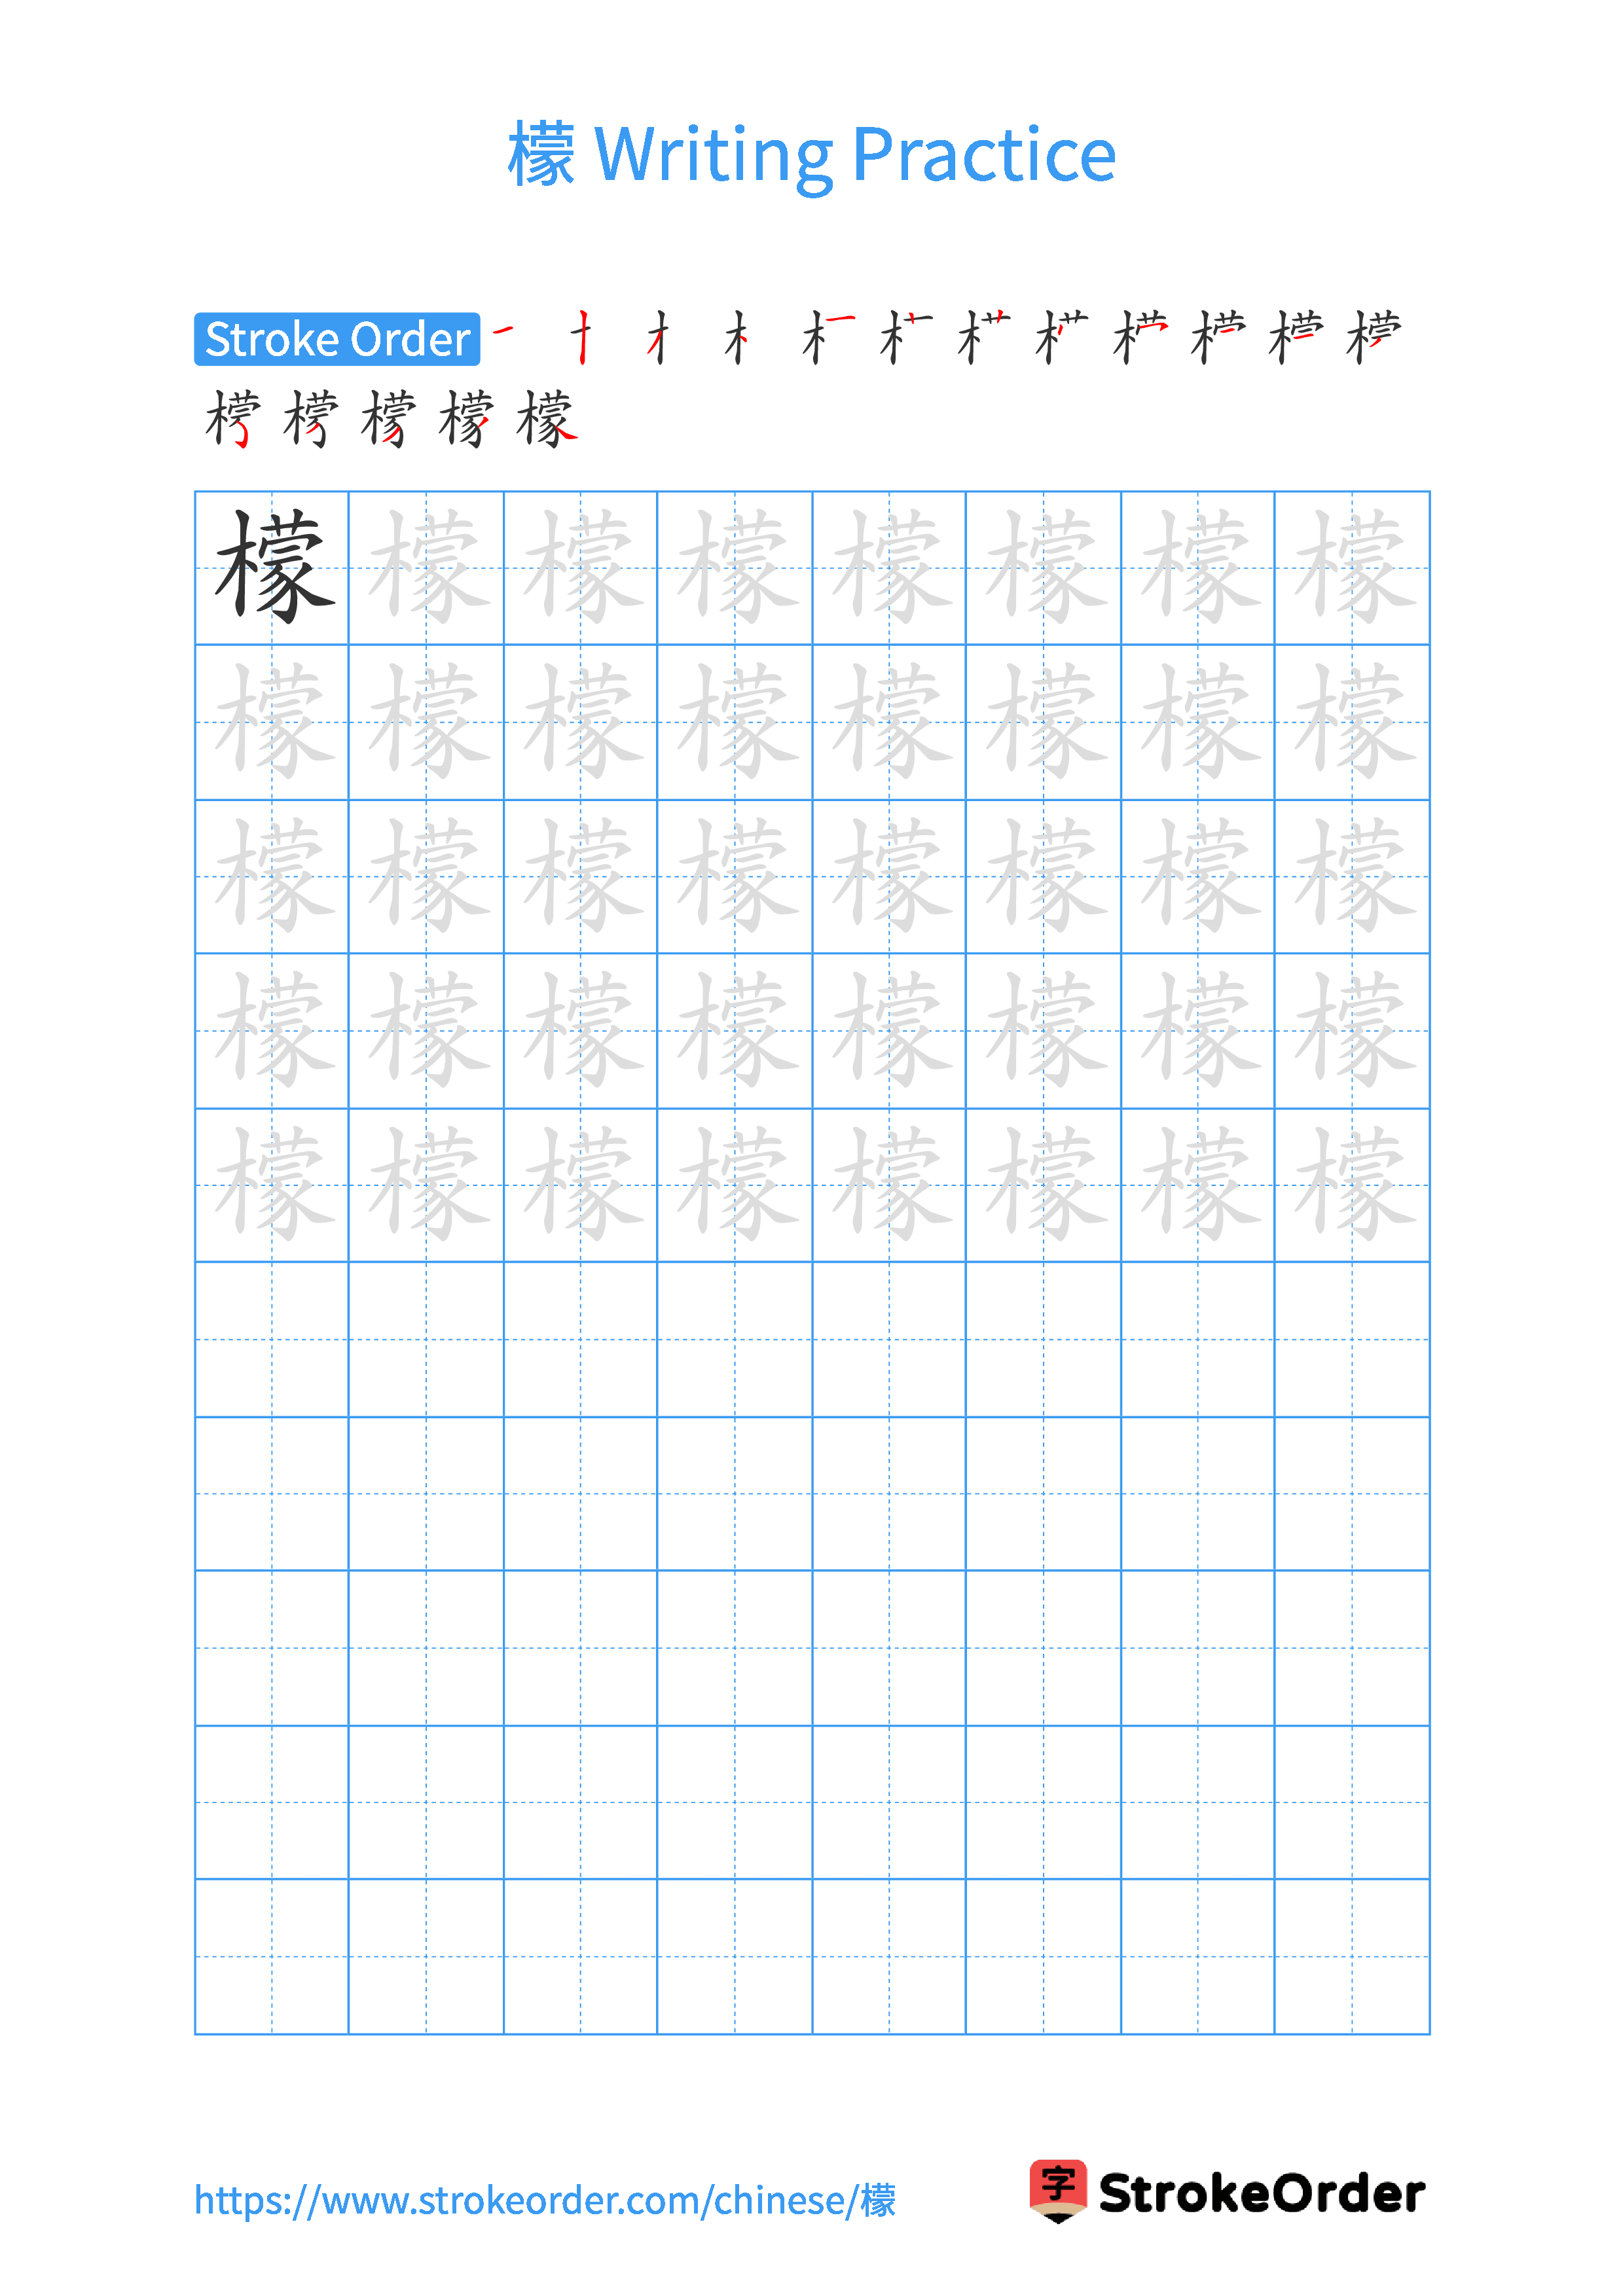 Printable Handwriting Practice Worksheet of the Chinese character 檬 in Portrait Orientation (Tian Zi Ge)